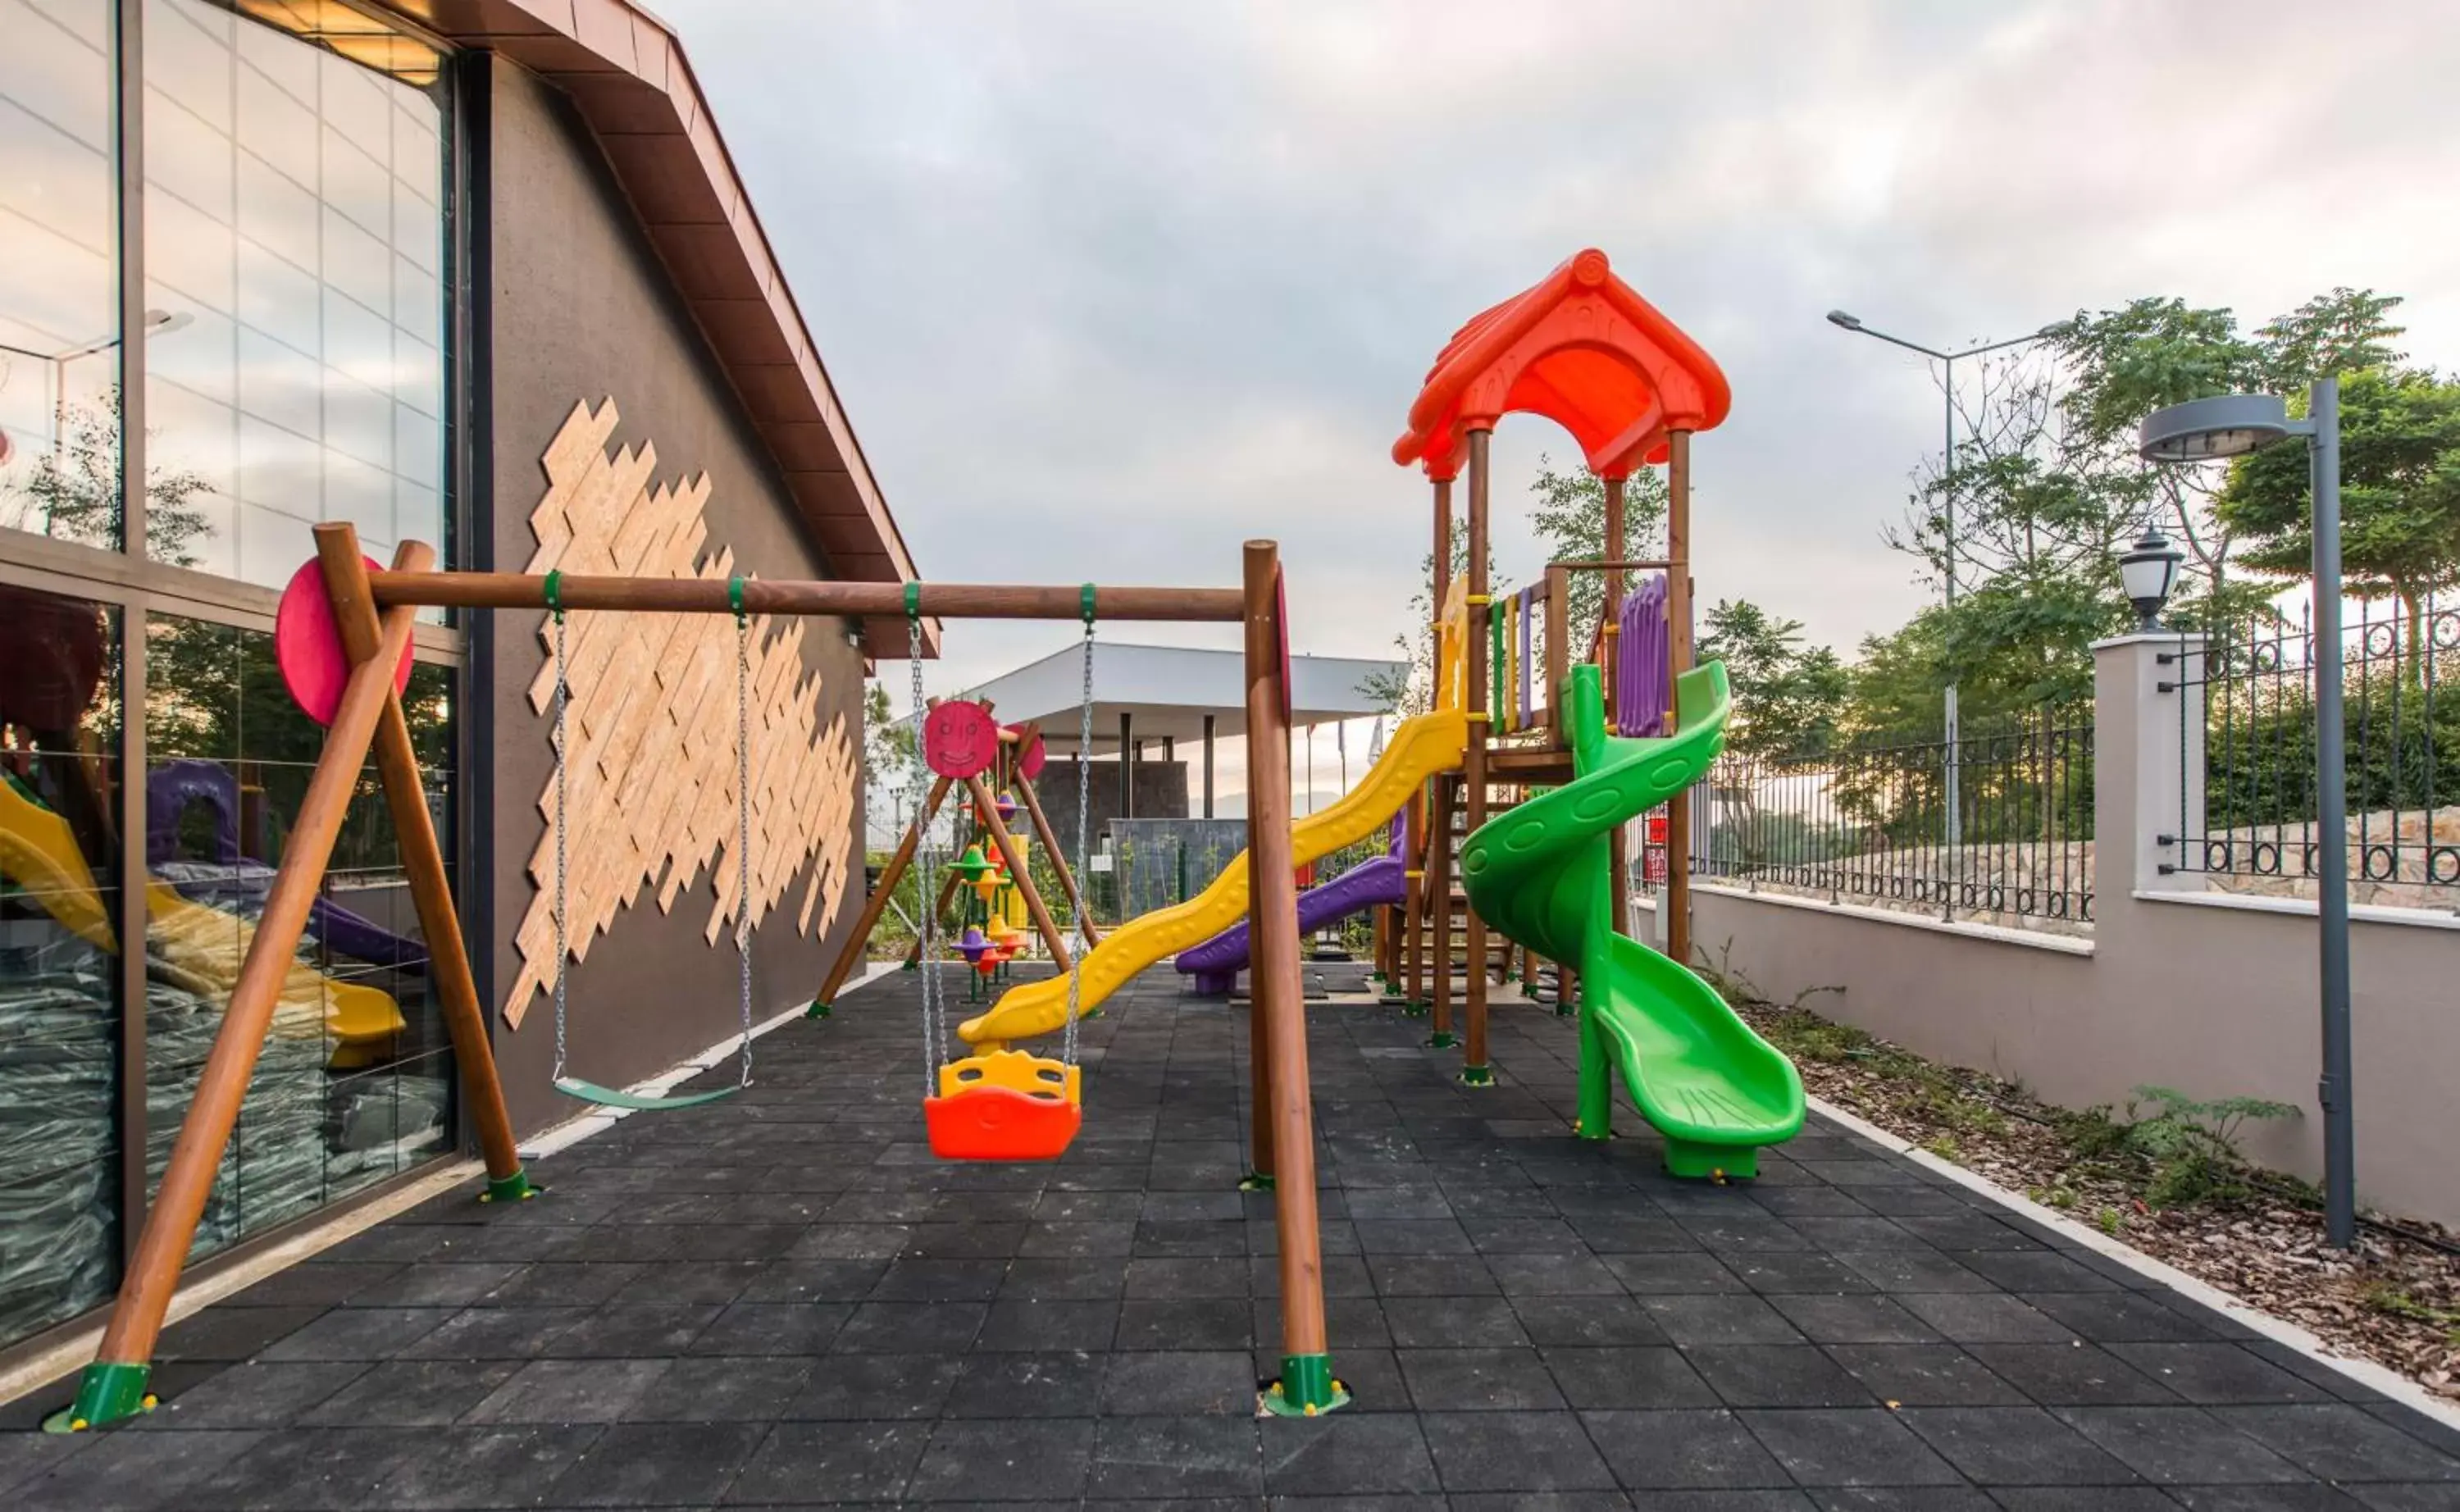 On site, Children's Play Area in Radisson Blu Hotel, Ordu